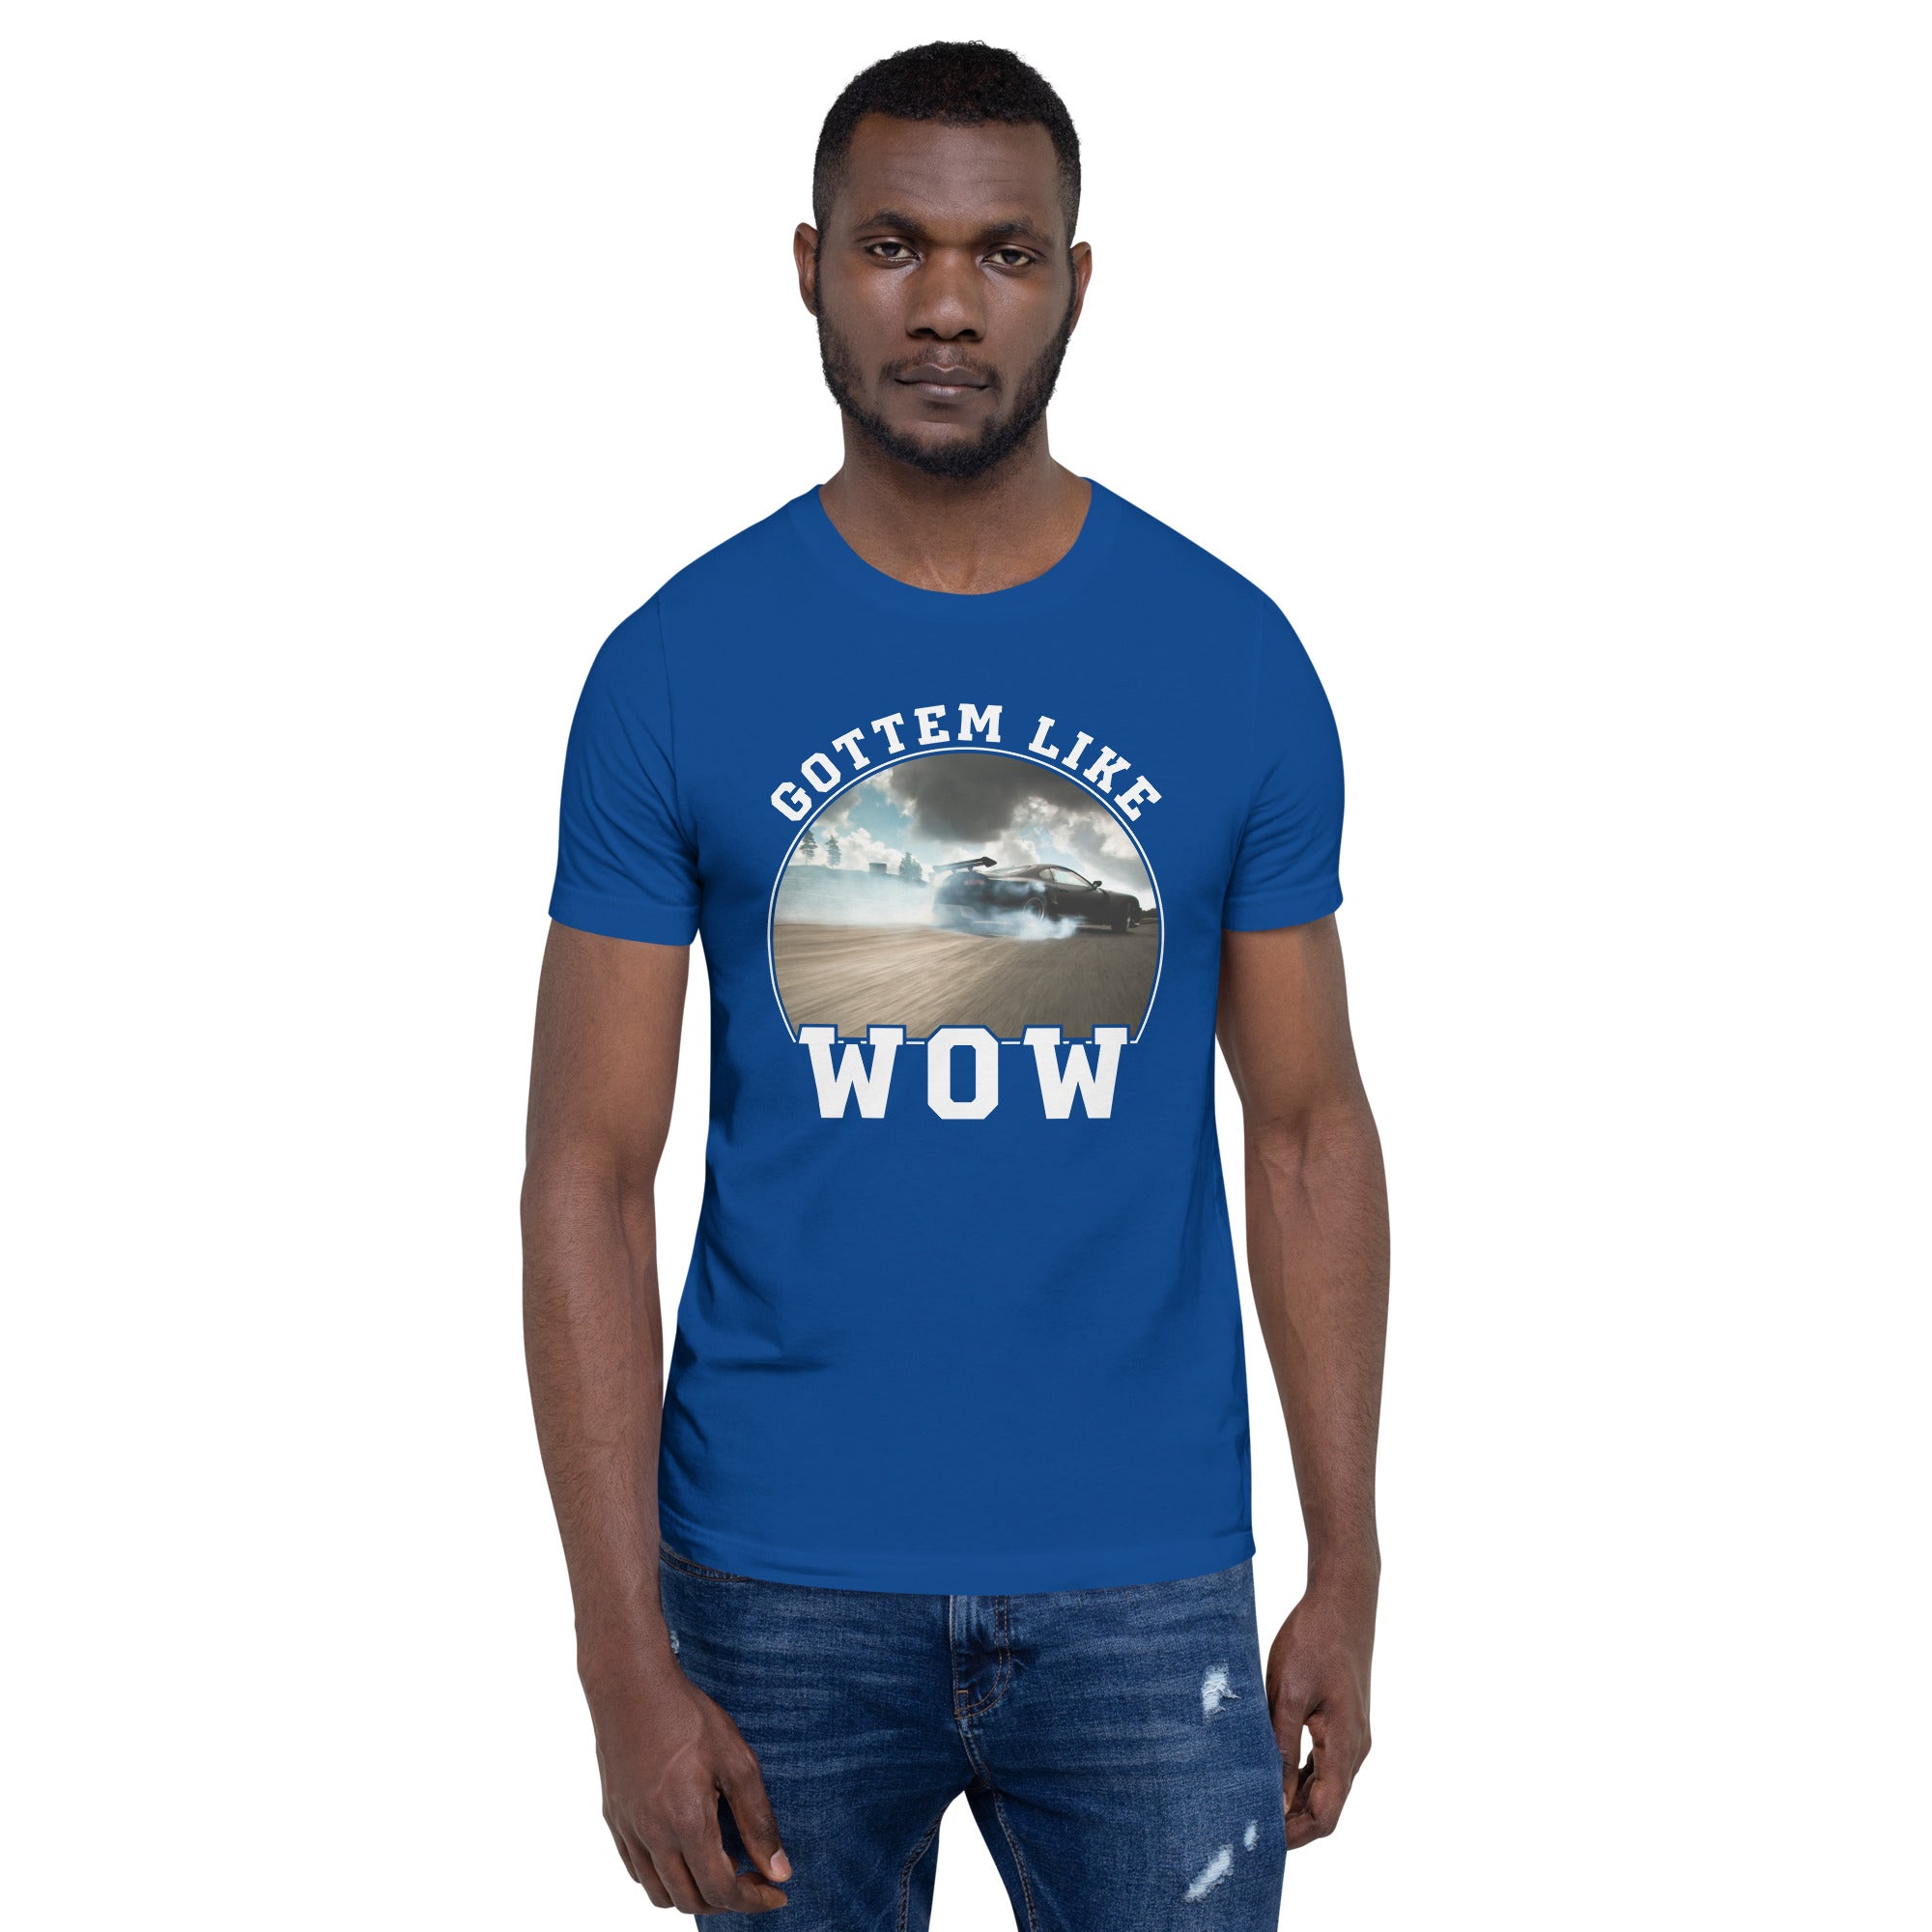 "Gottem Like wow" Motogeniks Unisex t-shirt